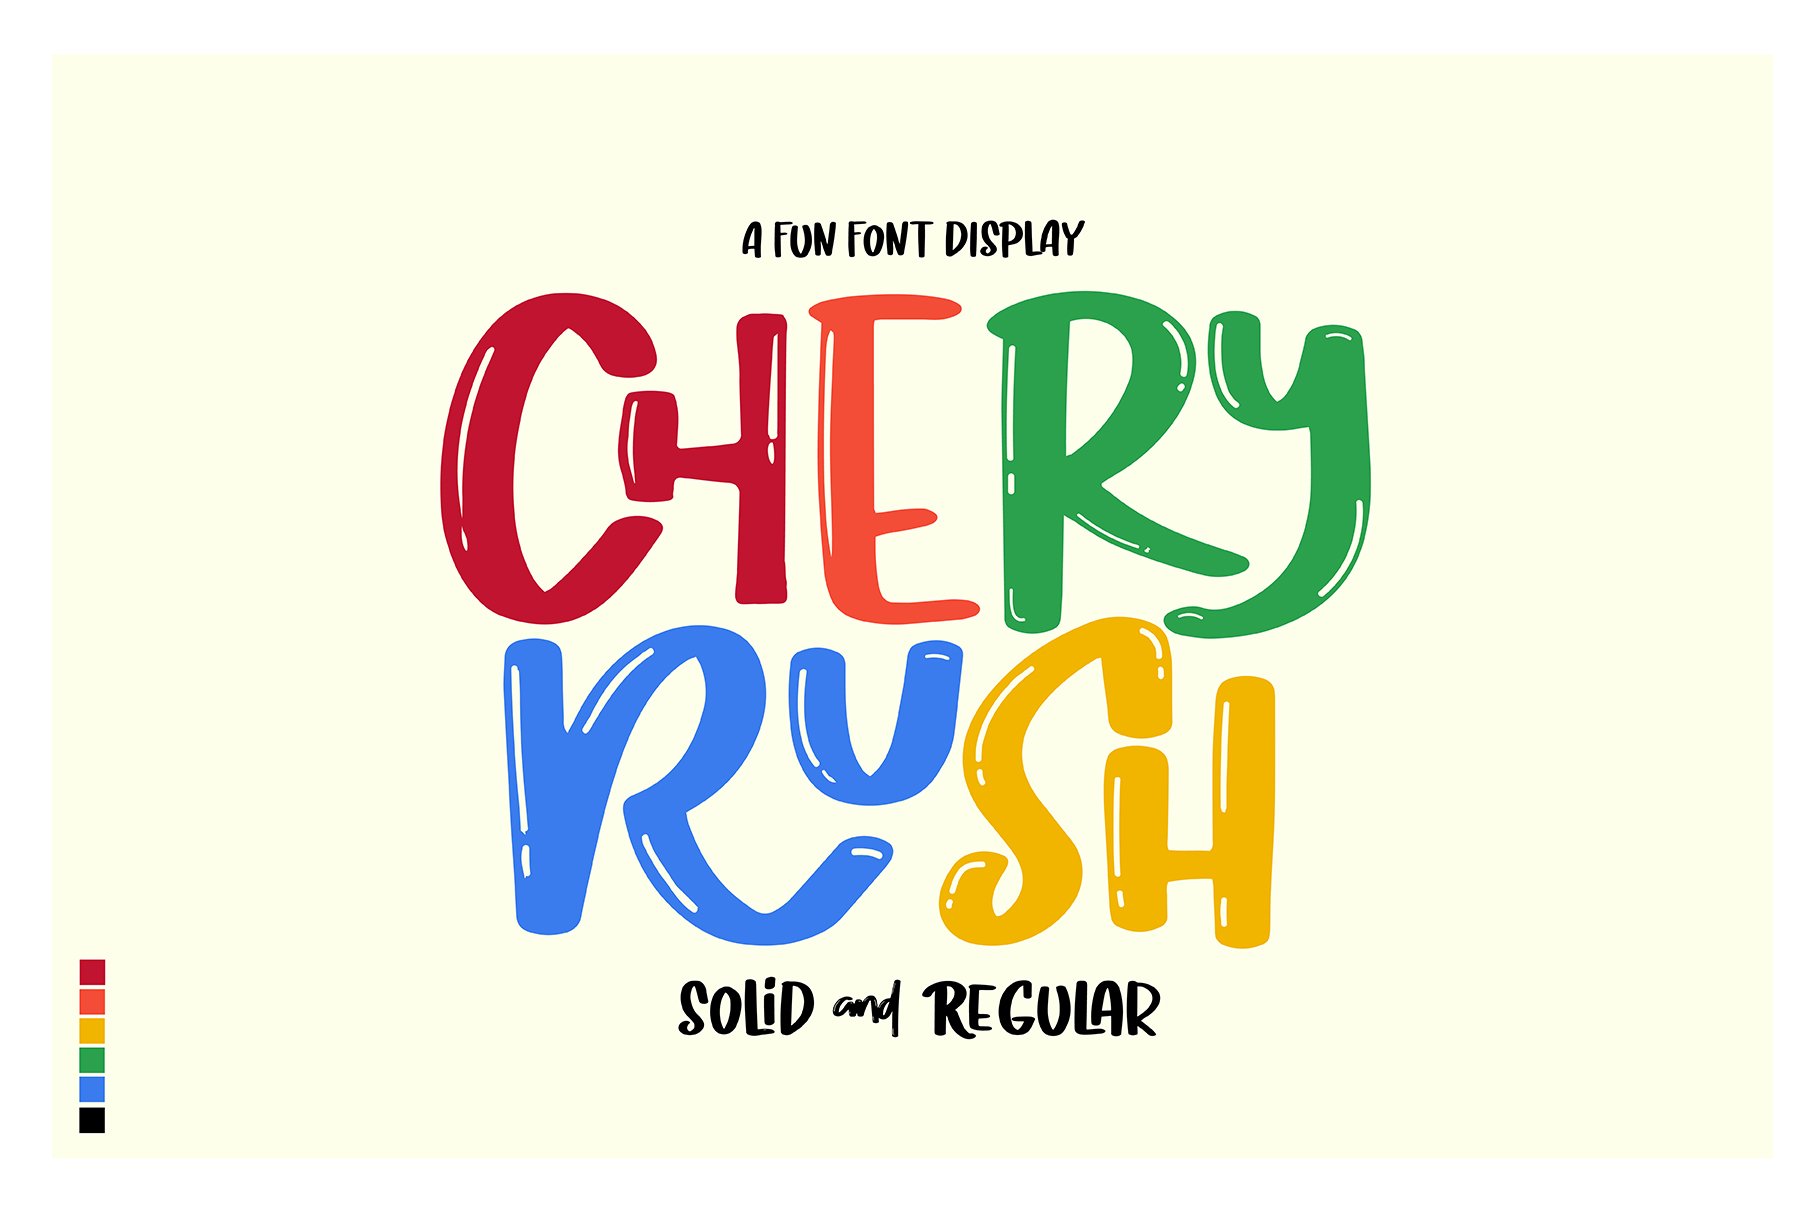 SALE CHERY RUSH: fun display! cover image.